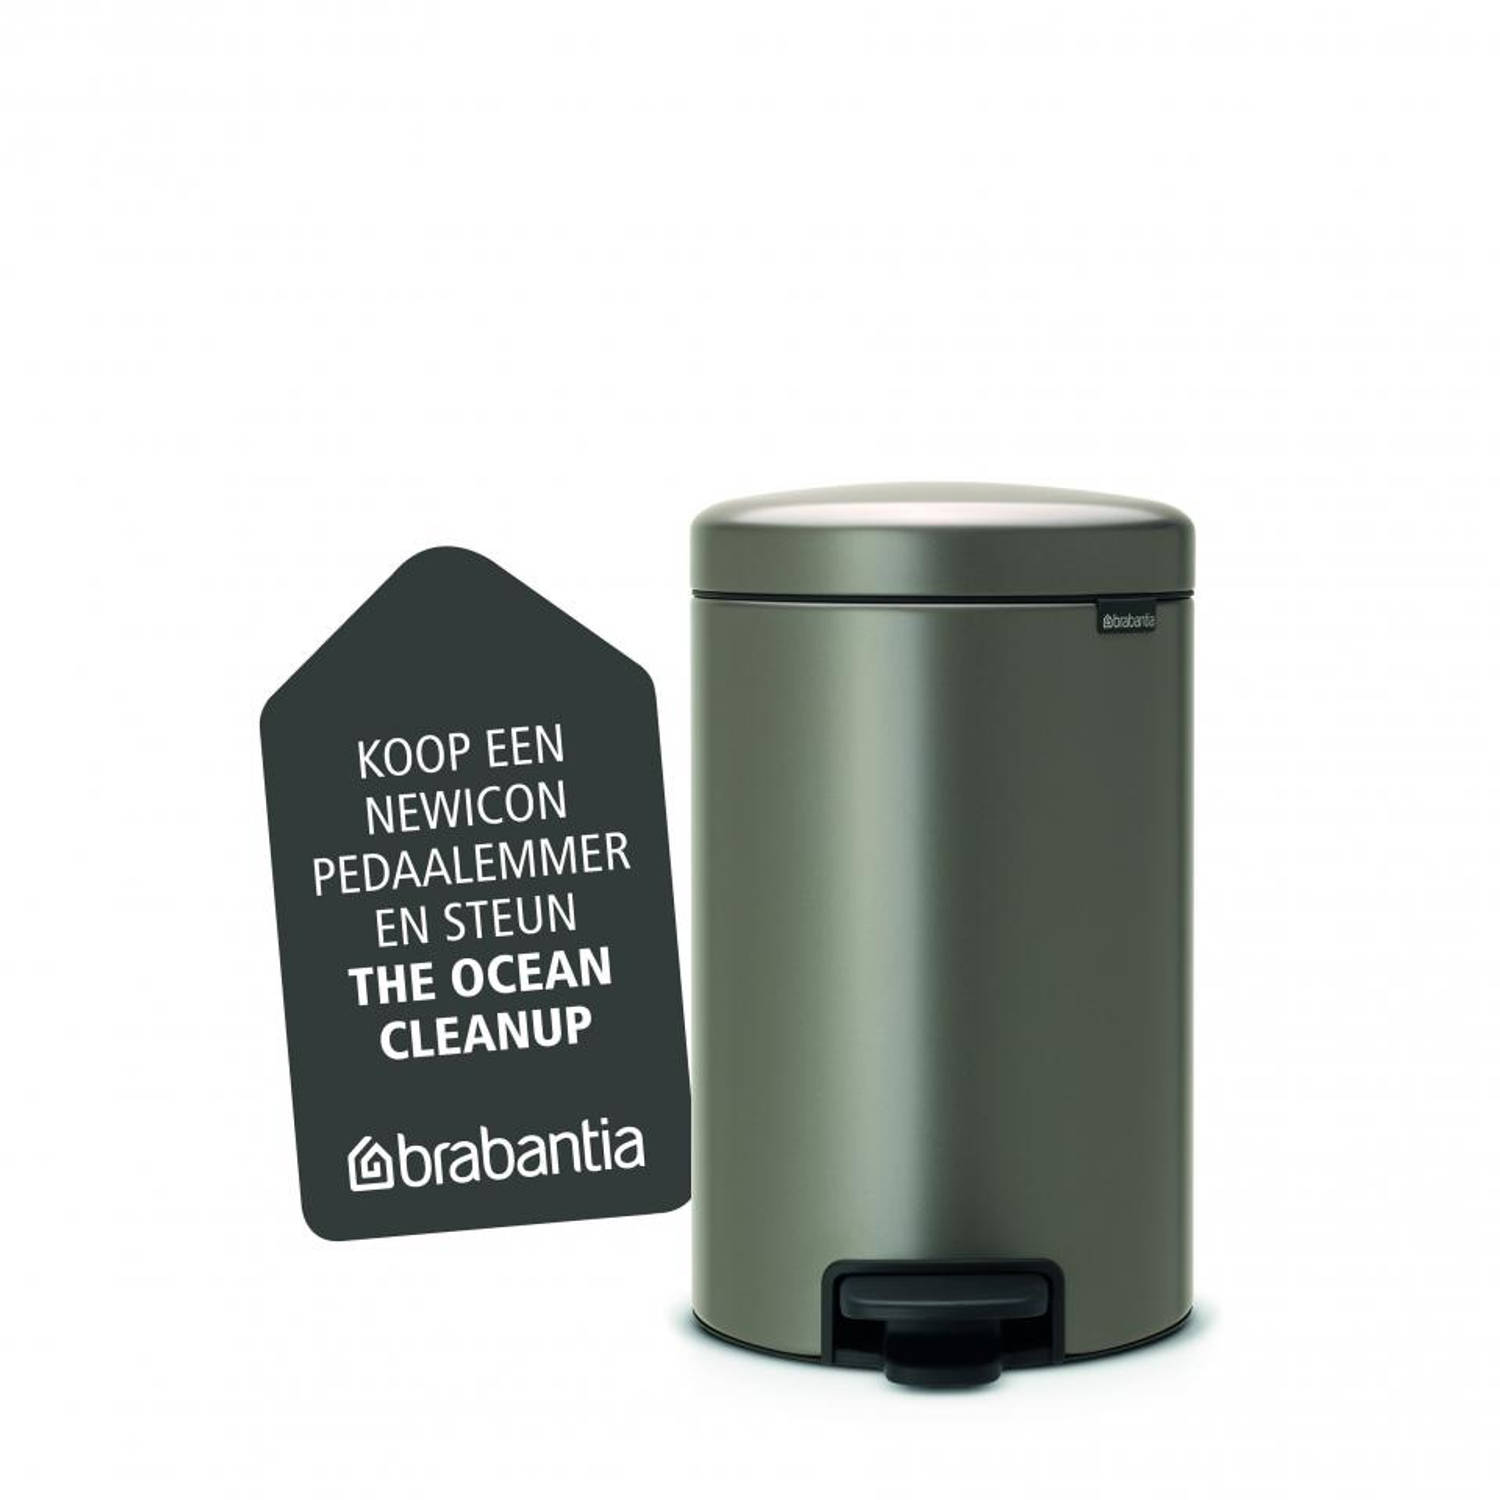 Bemiddelaar regionaal Helemaal droog Brabantia newIcon pedaalemmer 12 liter met kunststof binnenemmer - Platinum  | Blokker